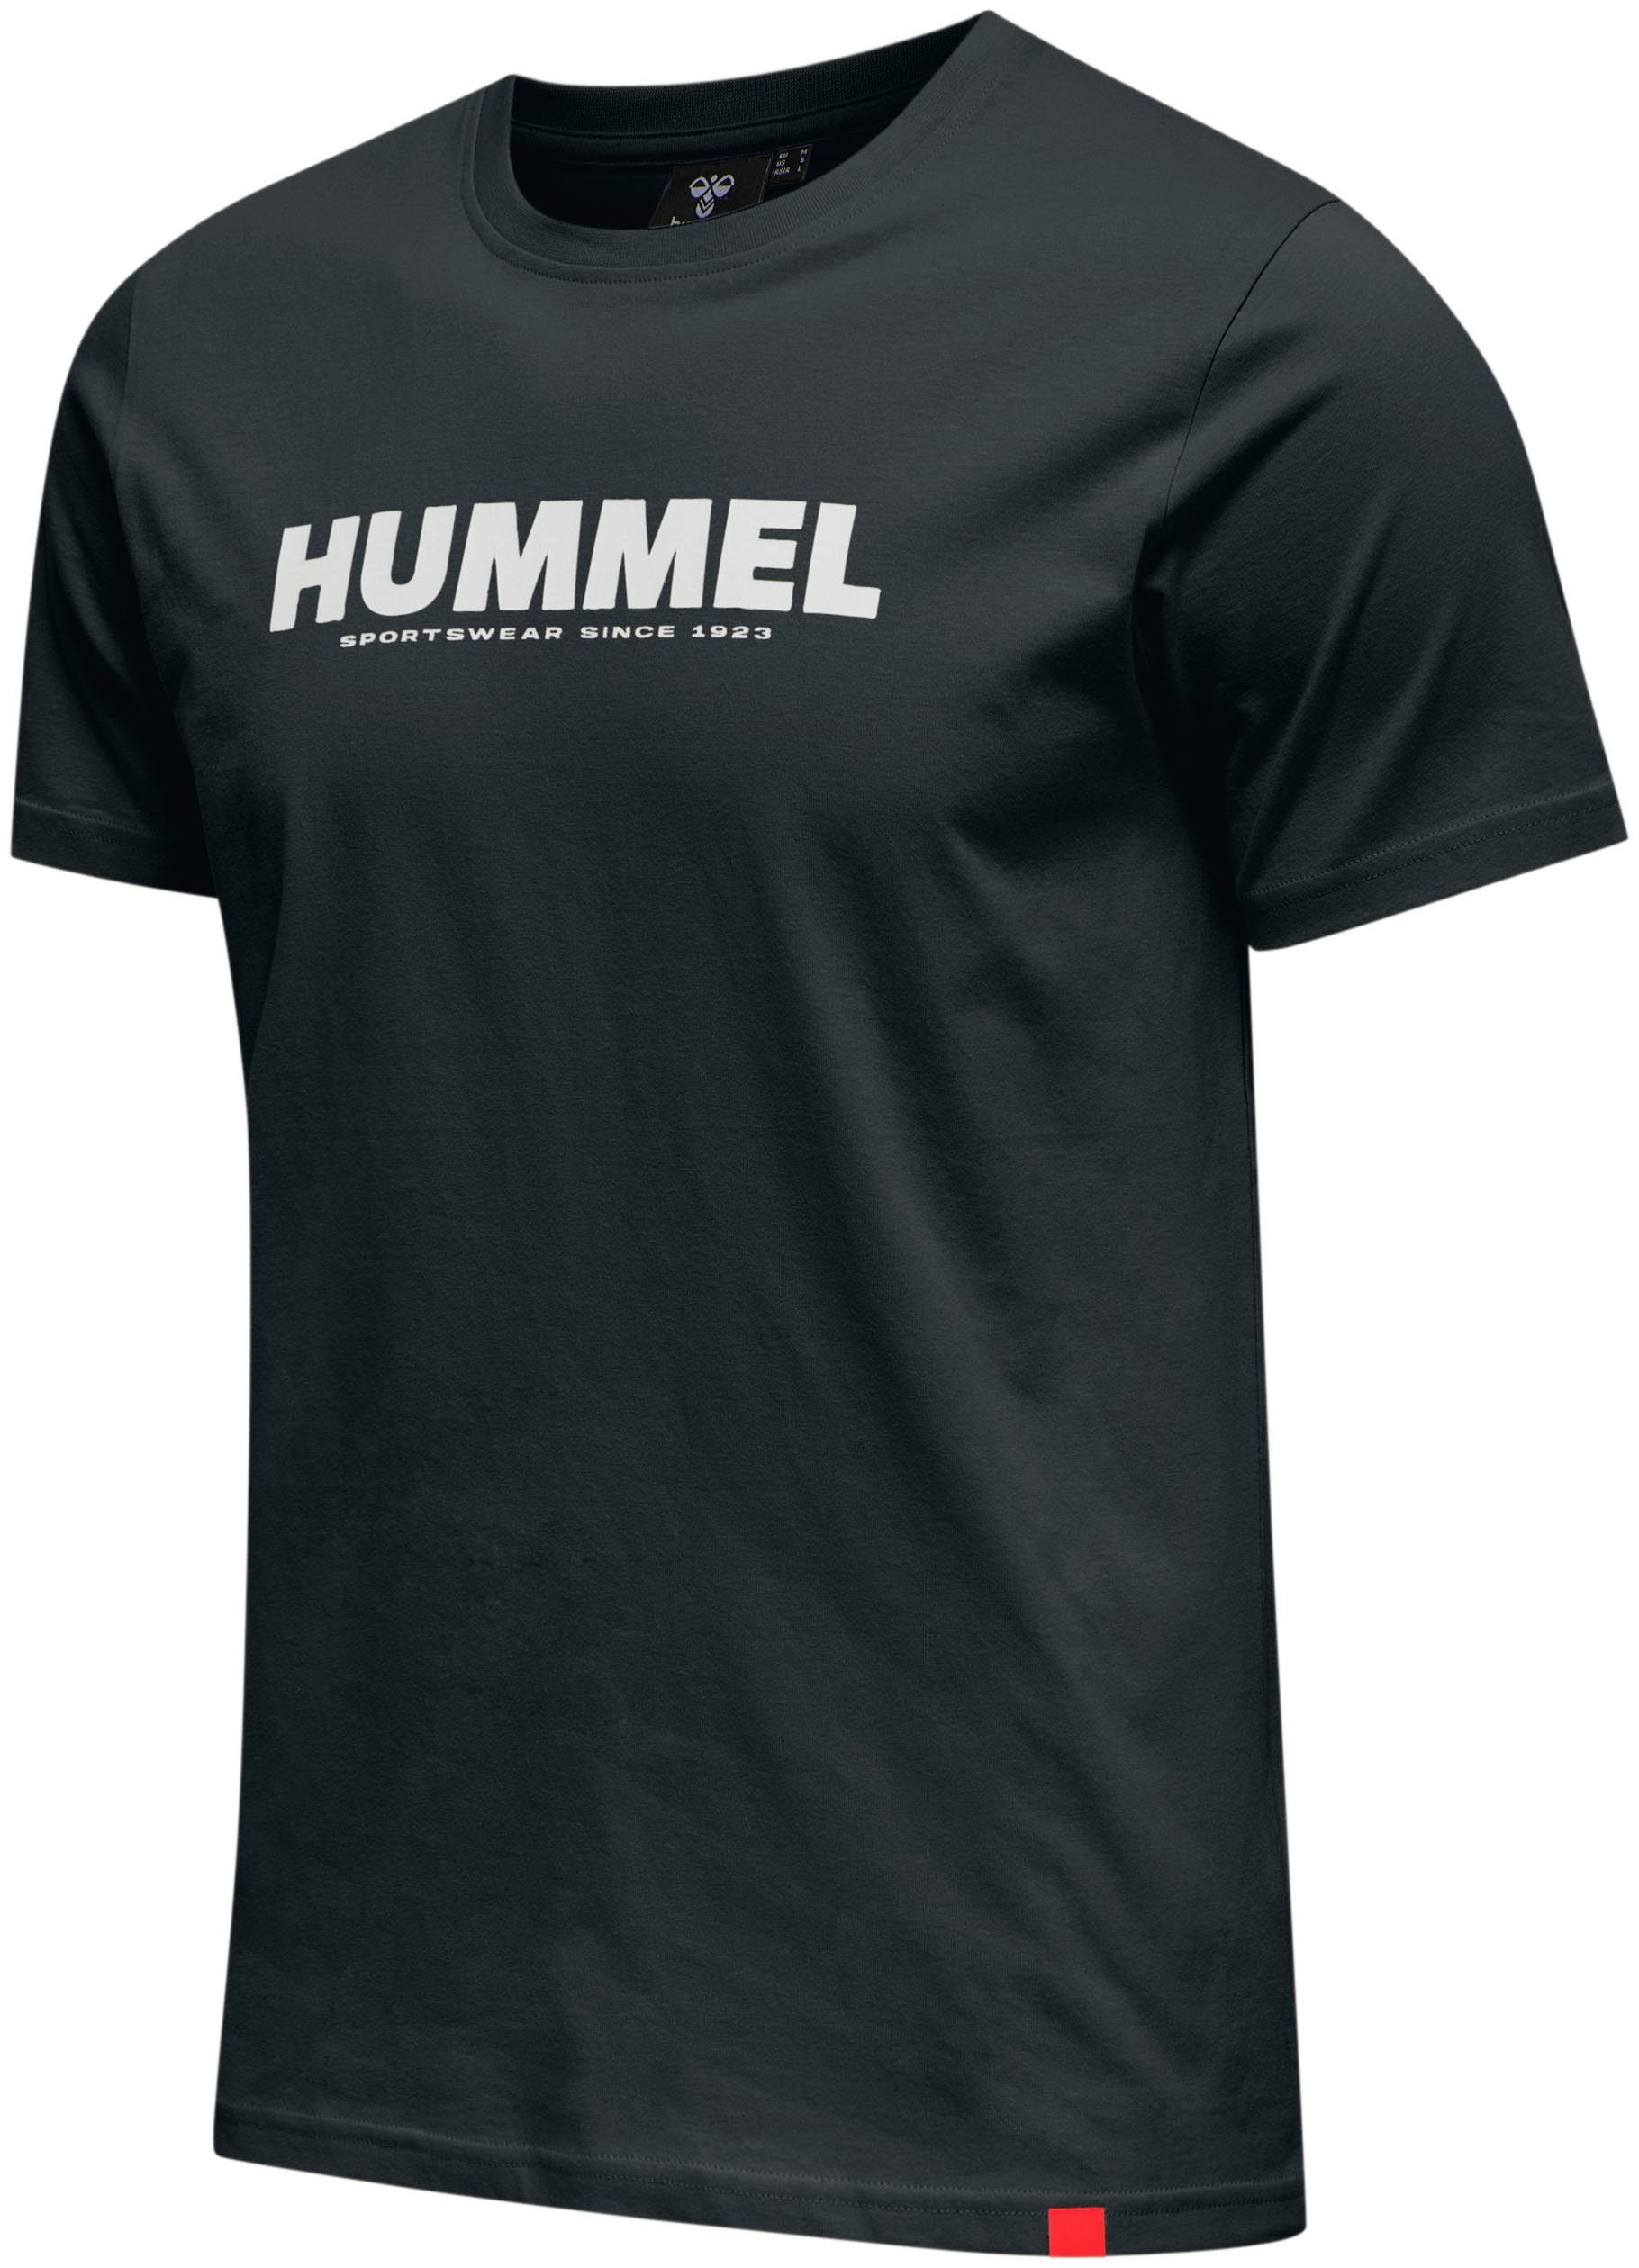 T-Shirt schwarz mit hummel Print Logo